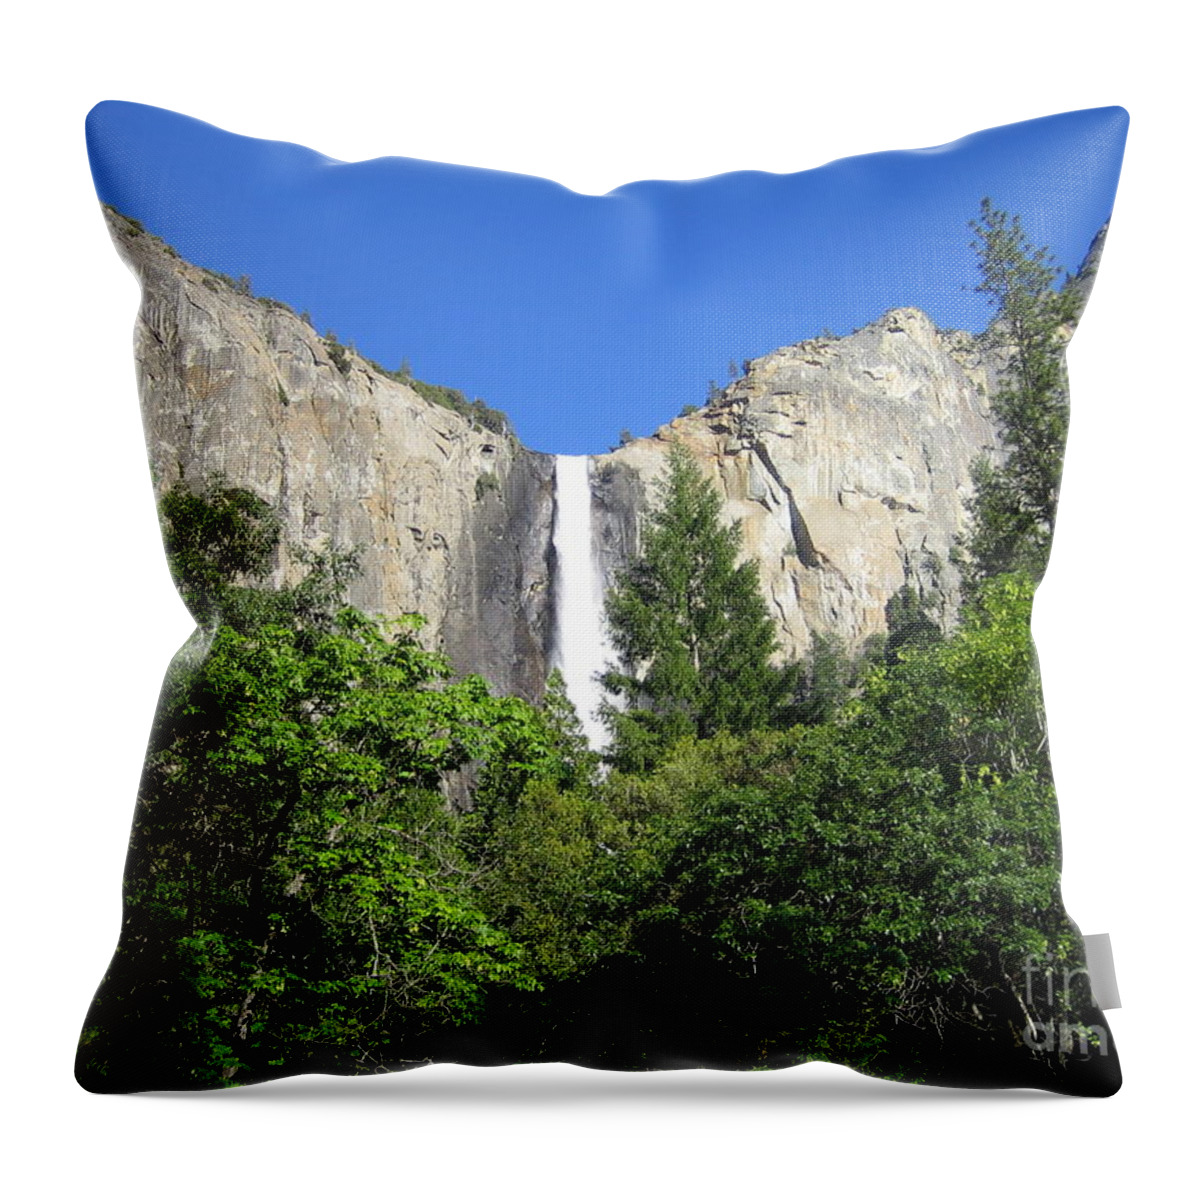 Yosemite Throw Pillow featuring the photograph Yosemite National Park Bridal Veil Falls Panoramic View by John Shiron